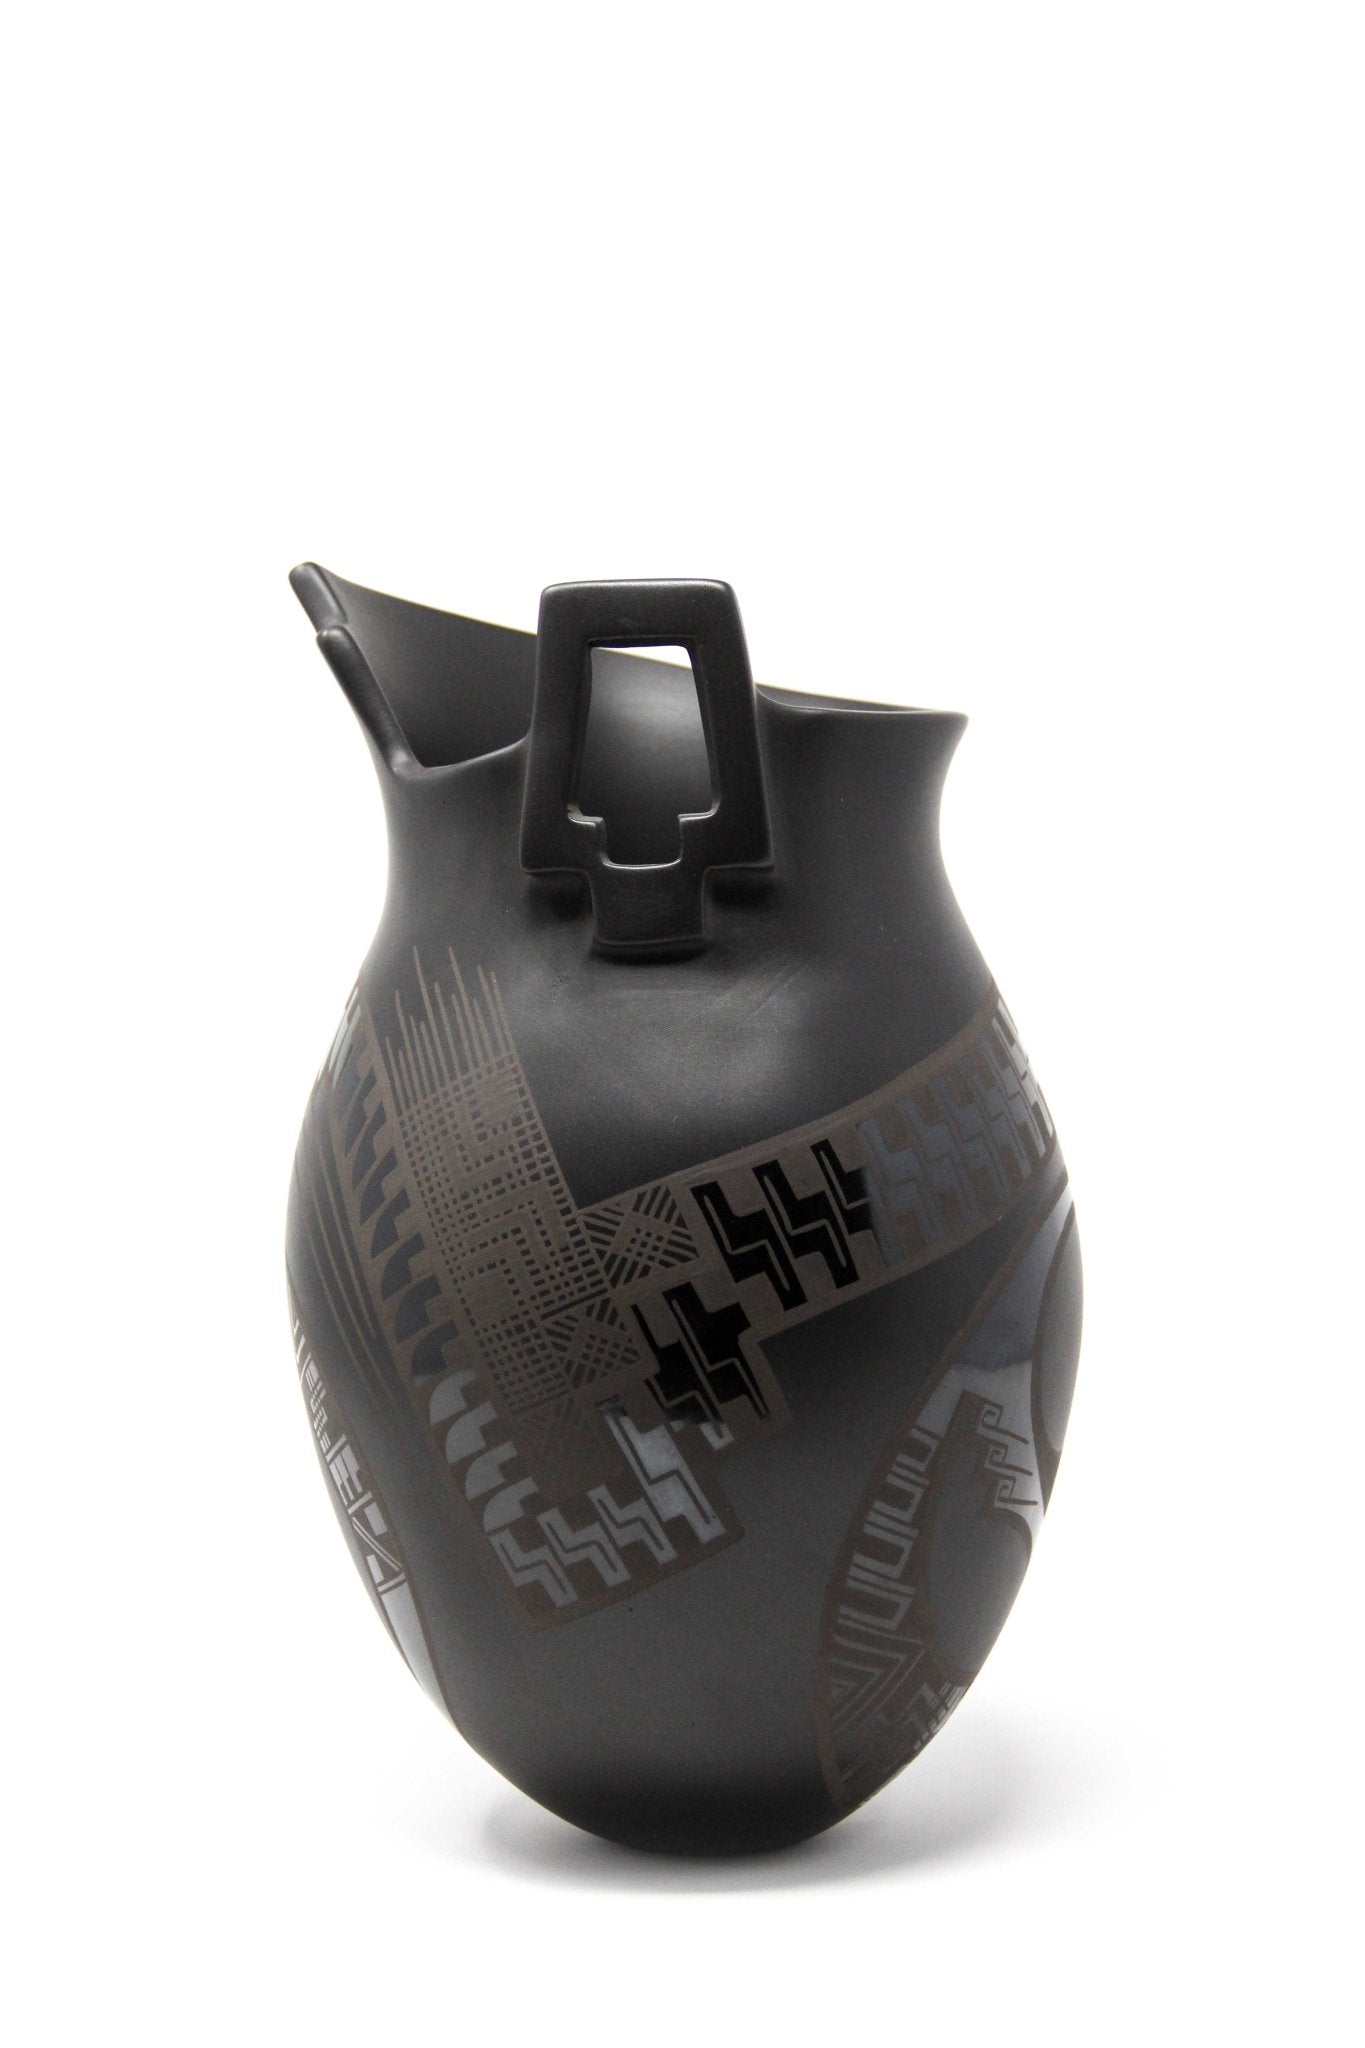 Mata Ortiz ceramic - Black piece with fretwork I - Huichol art - Marakame